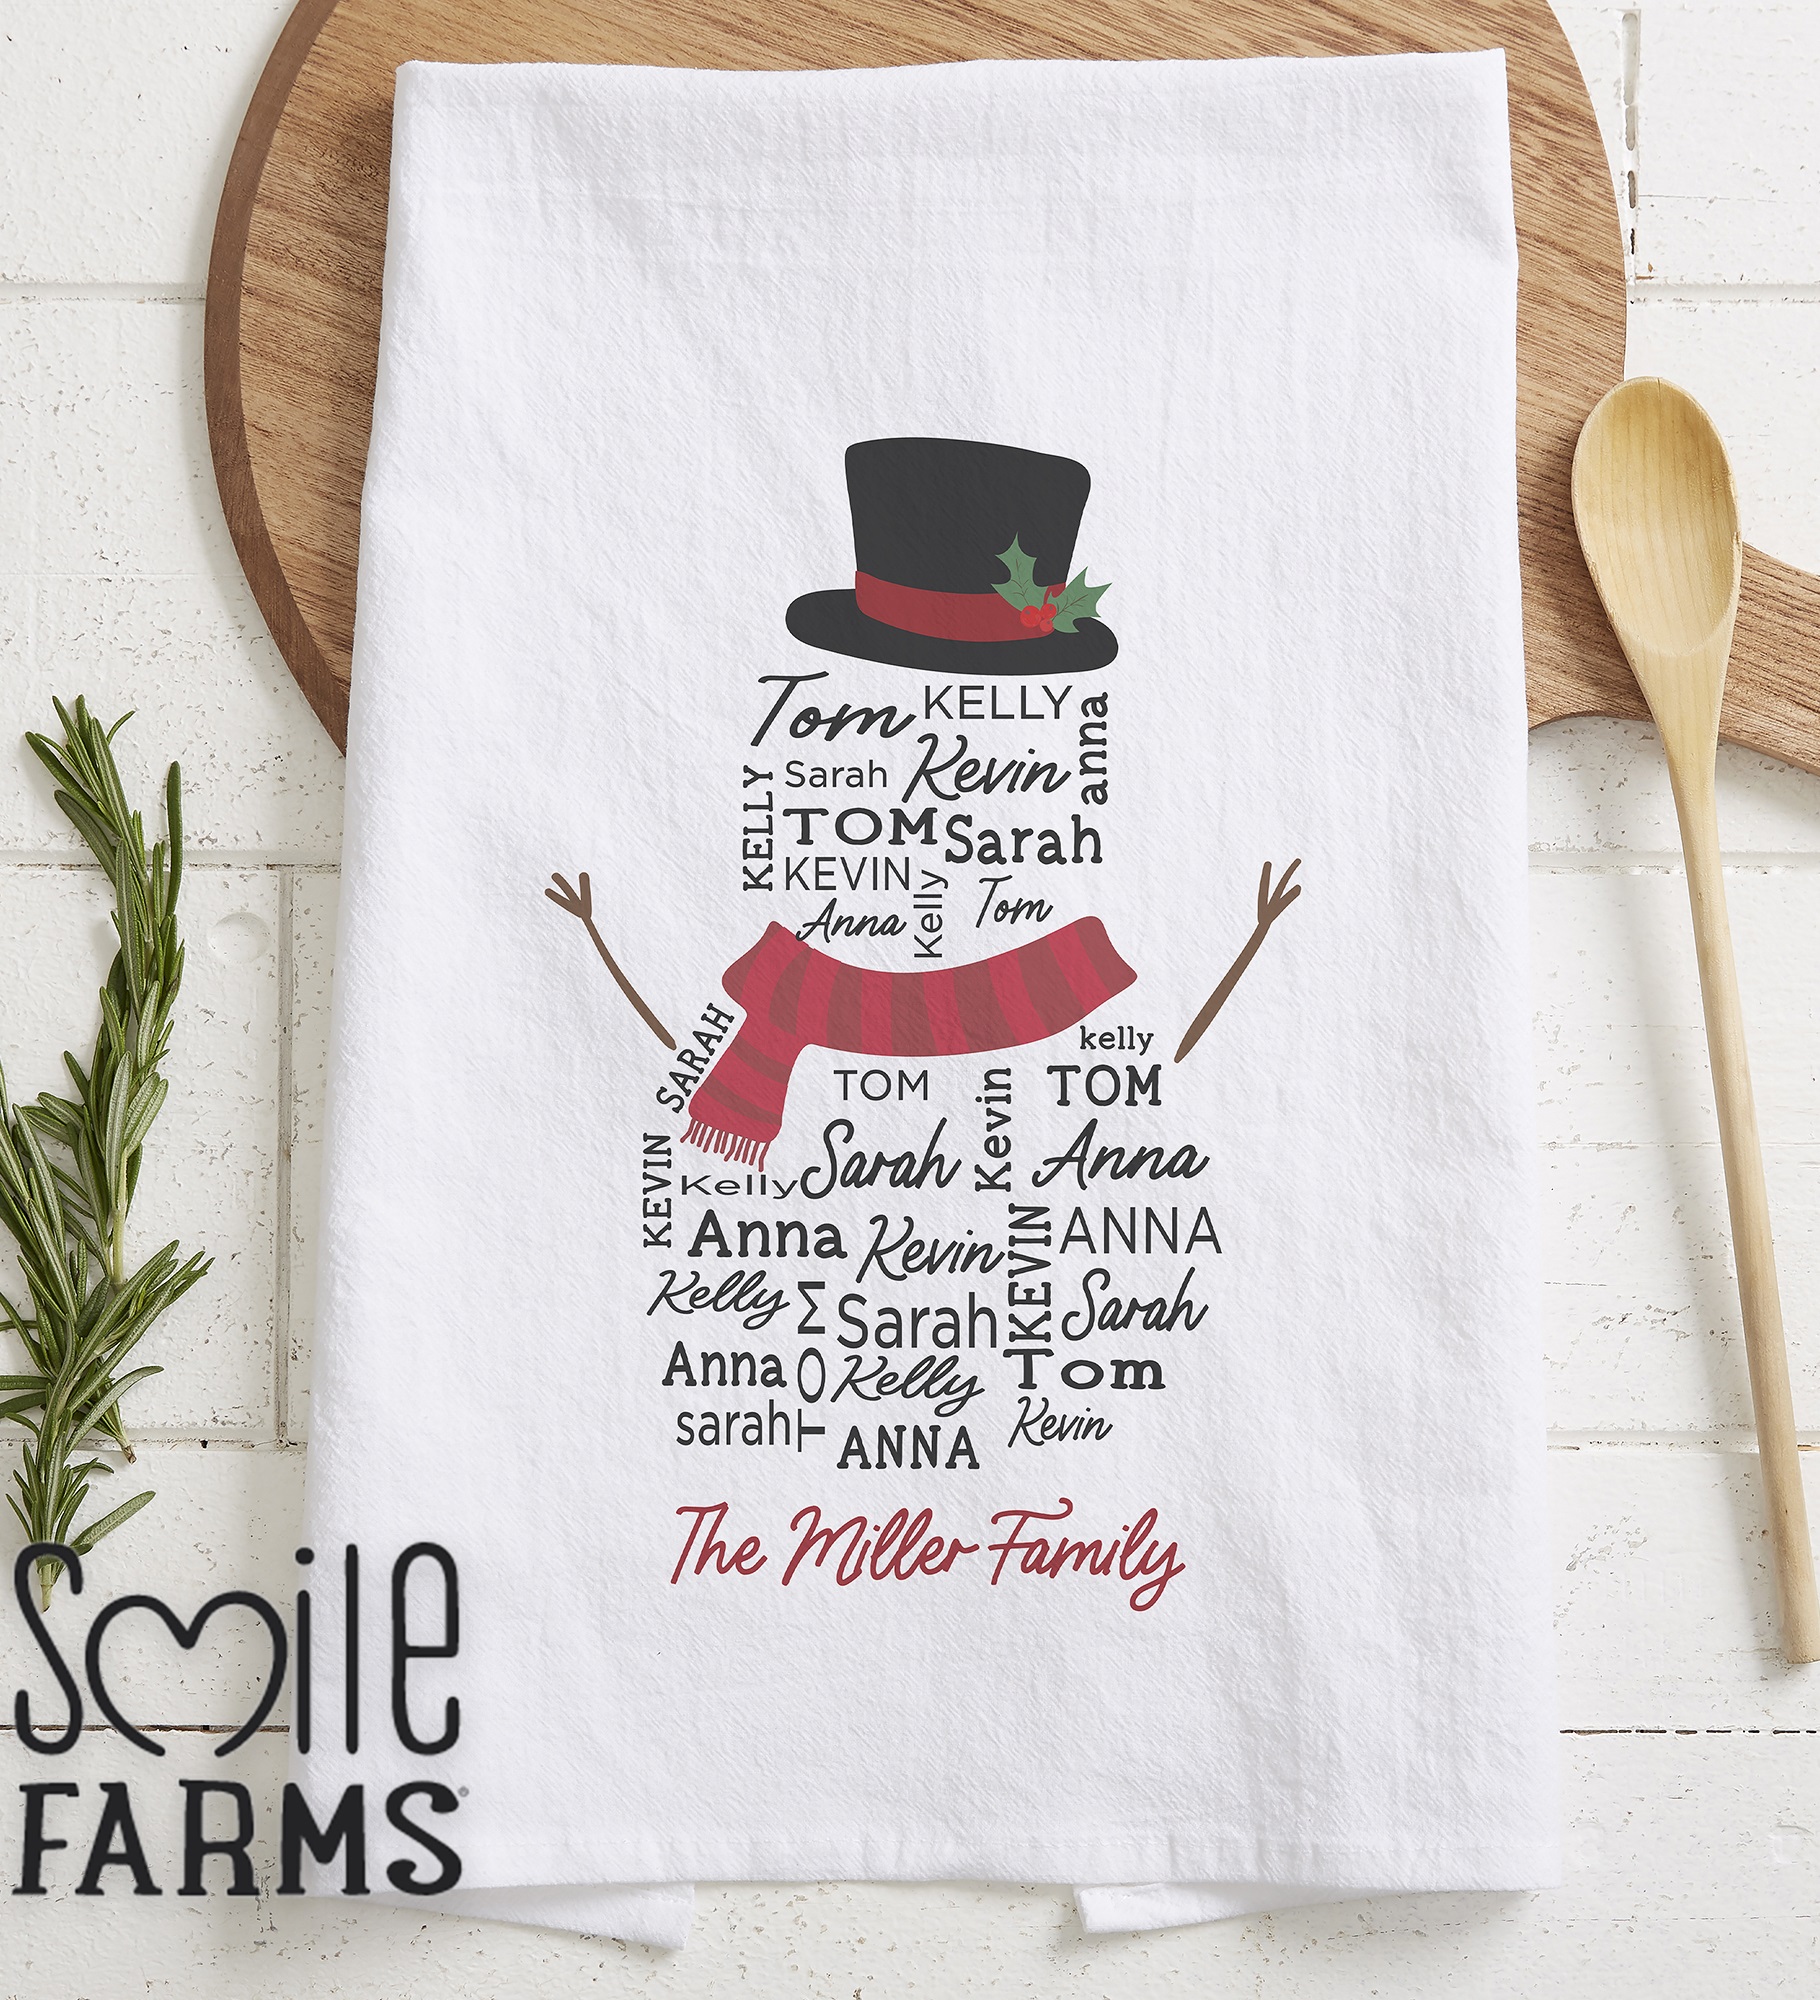 Smile Farms - Snowman Repeating Name Personalized Christmas Tea Towel